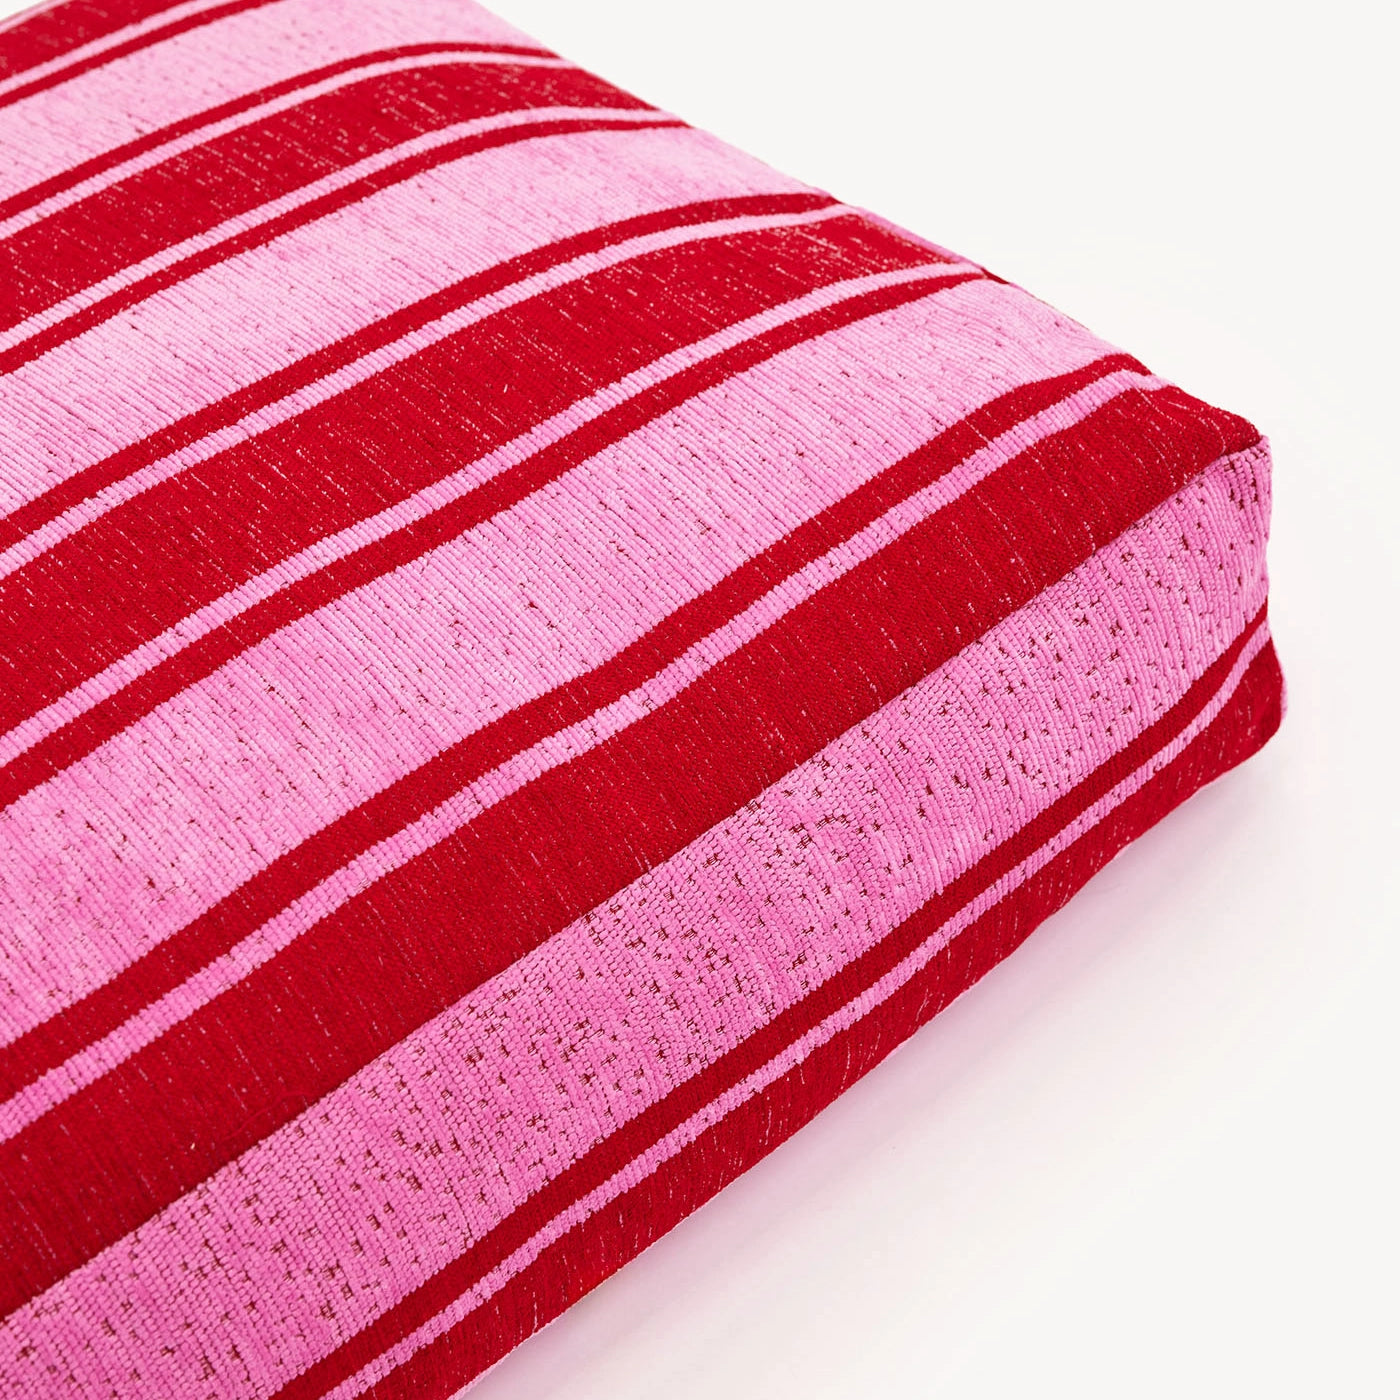 Stripe Dog Bed - Pink/Red